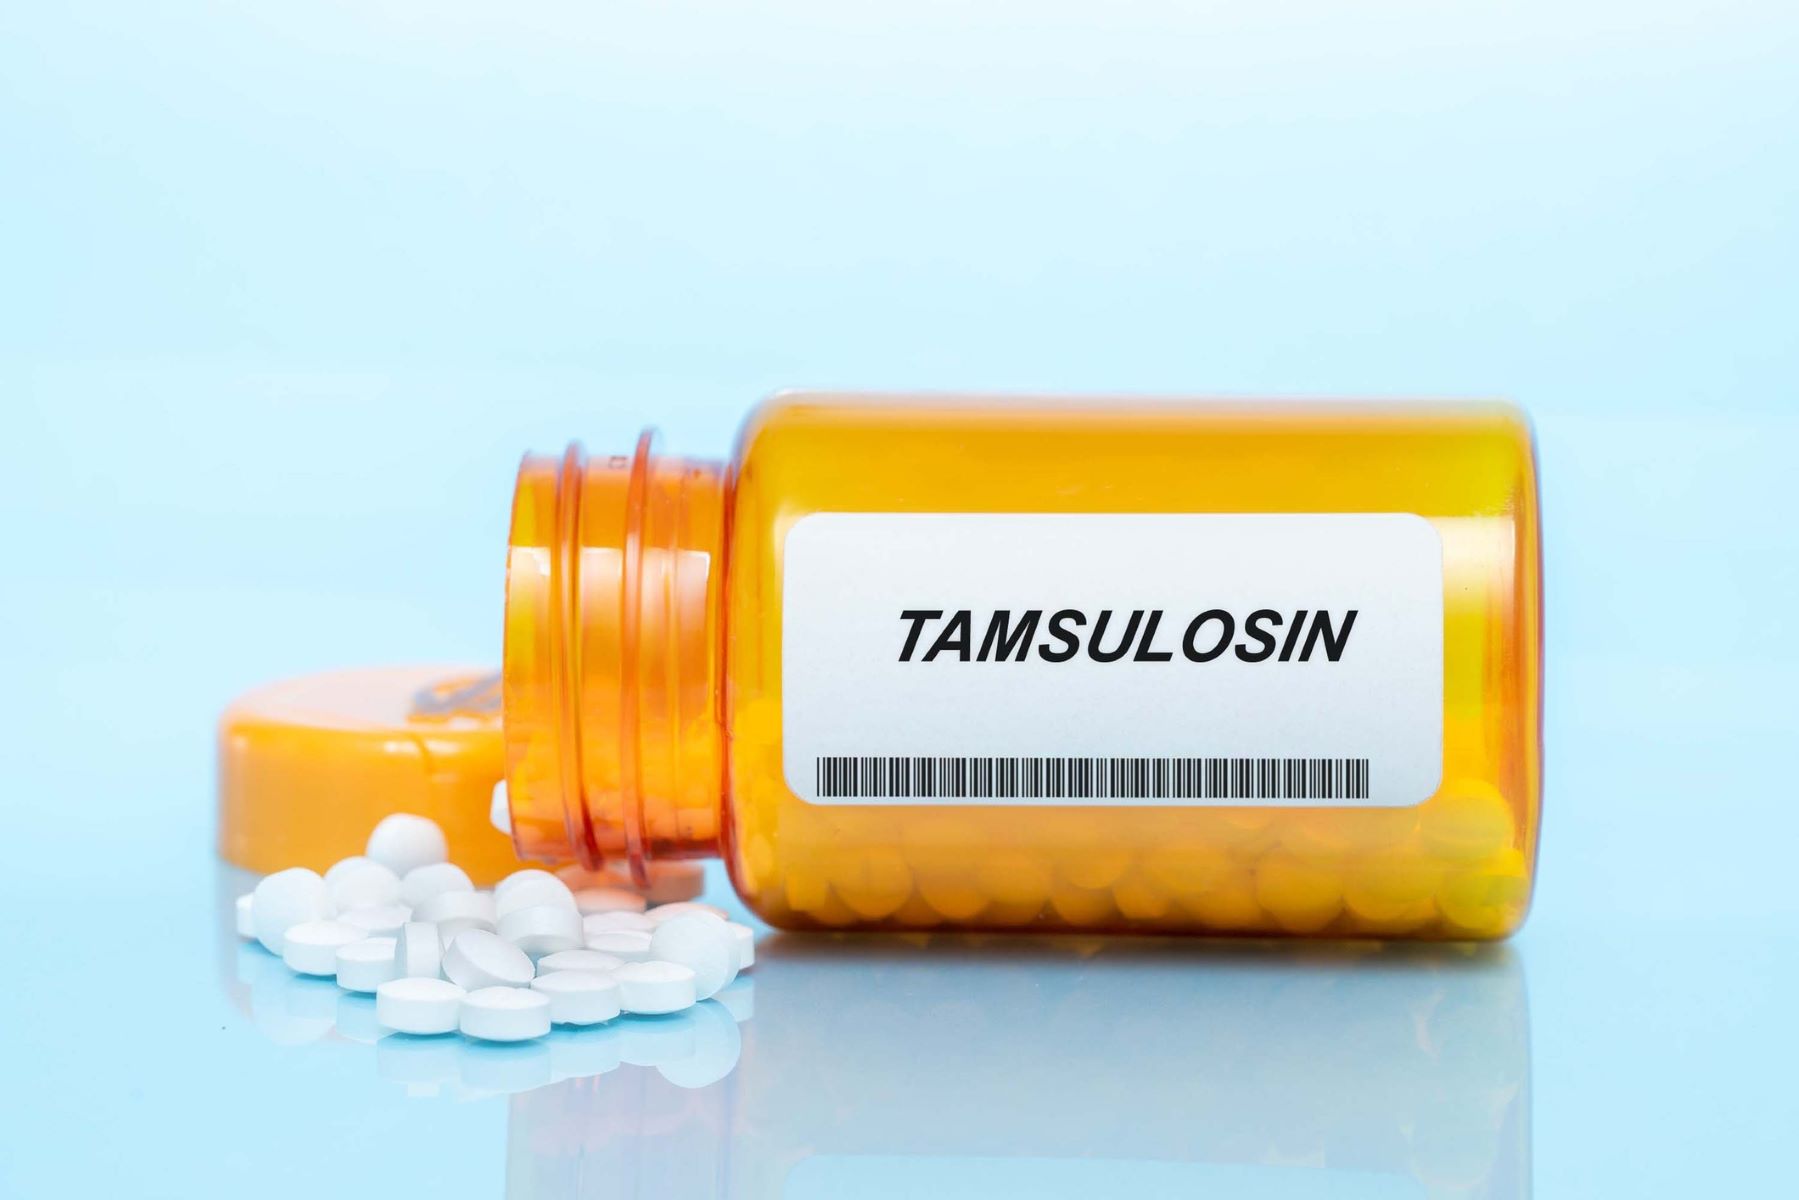 Tamsulosin for hair loss